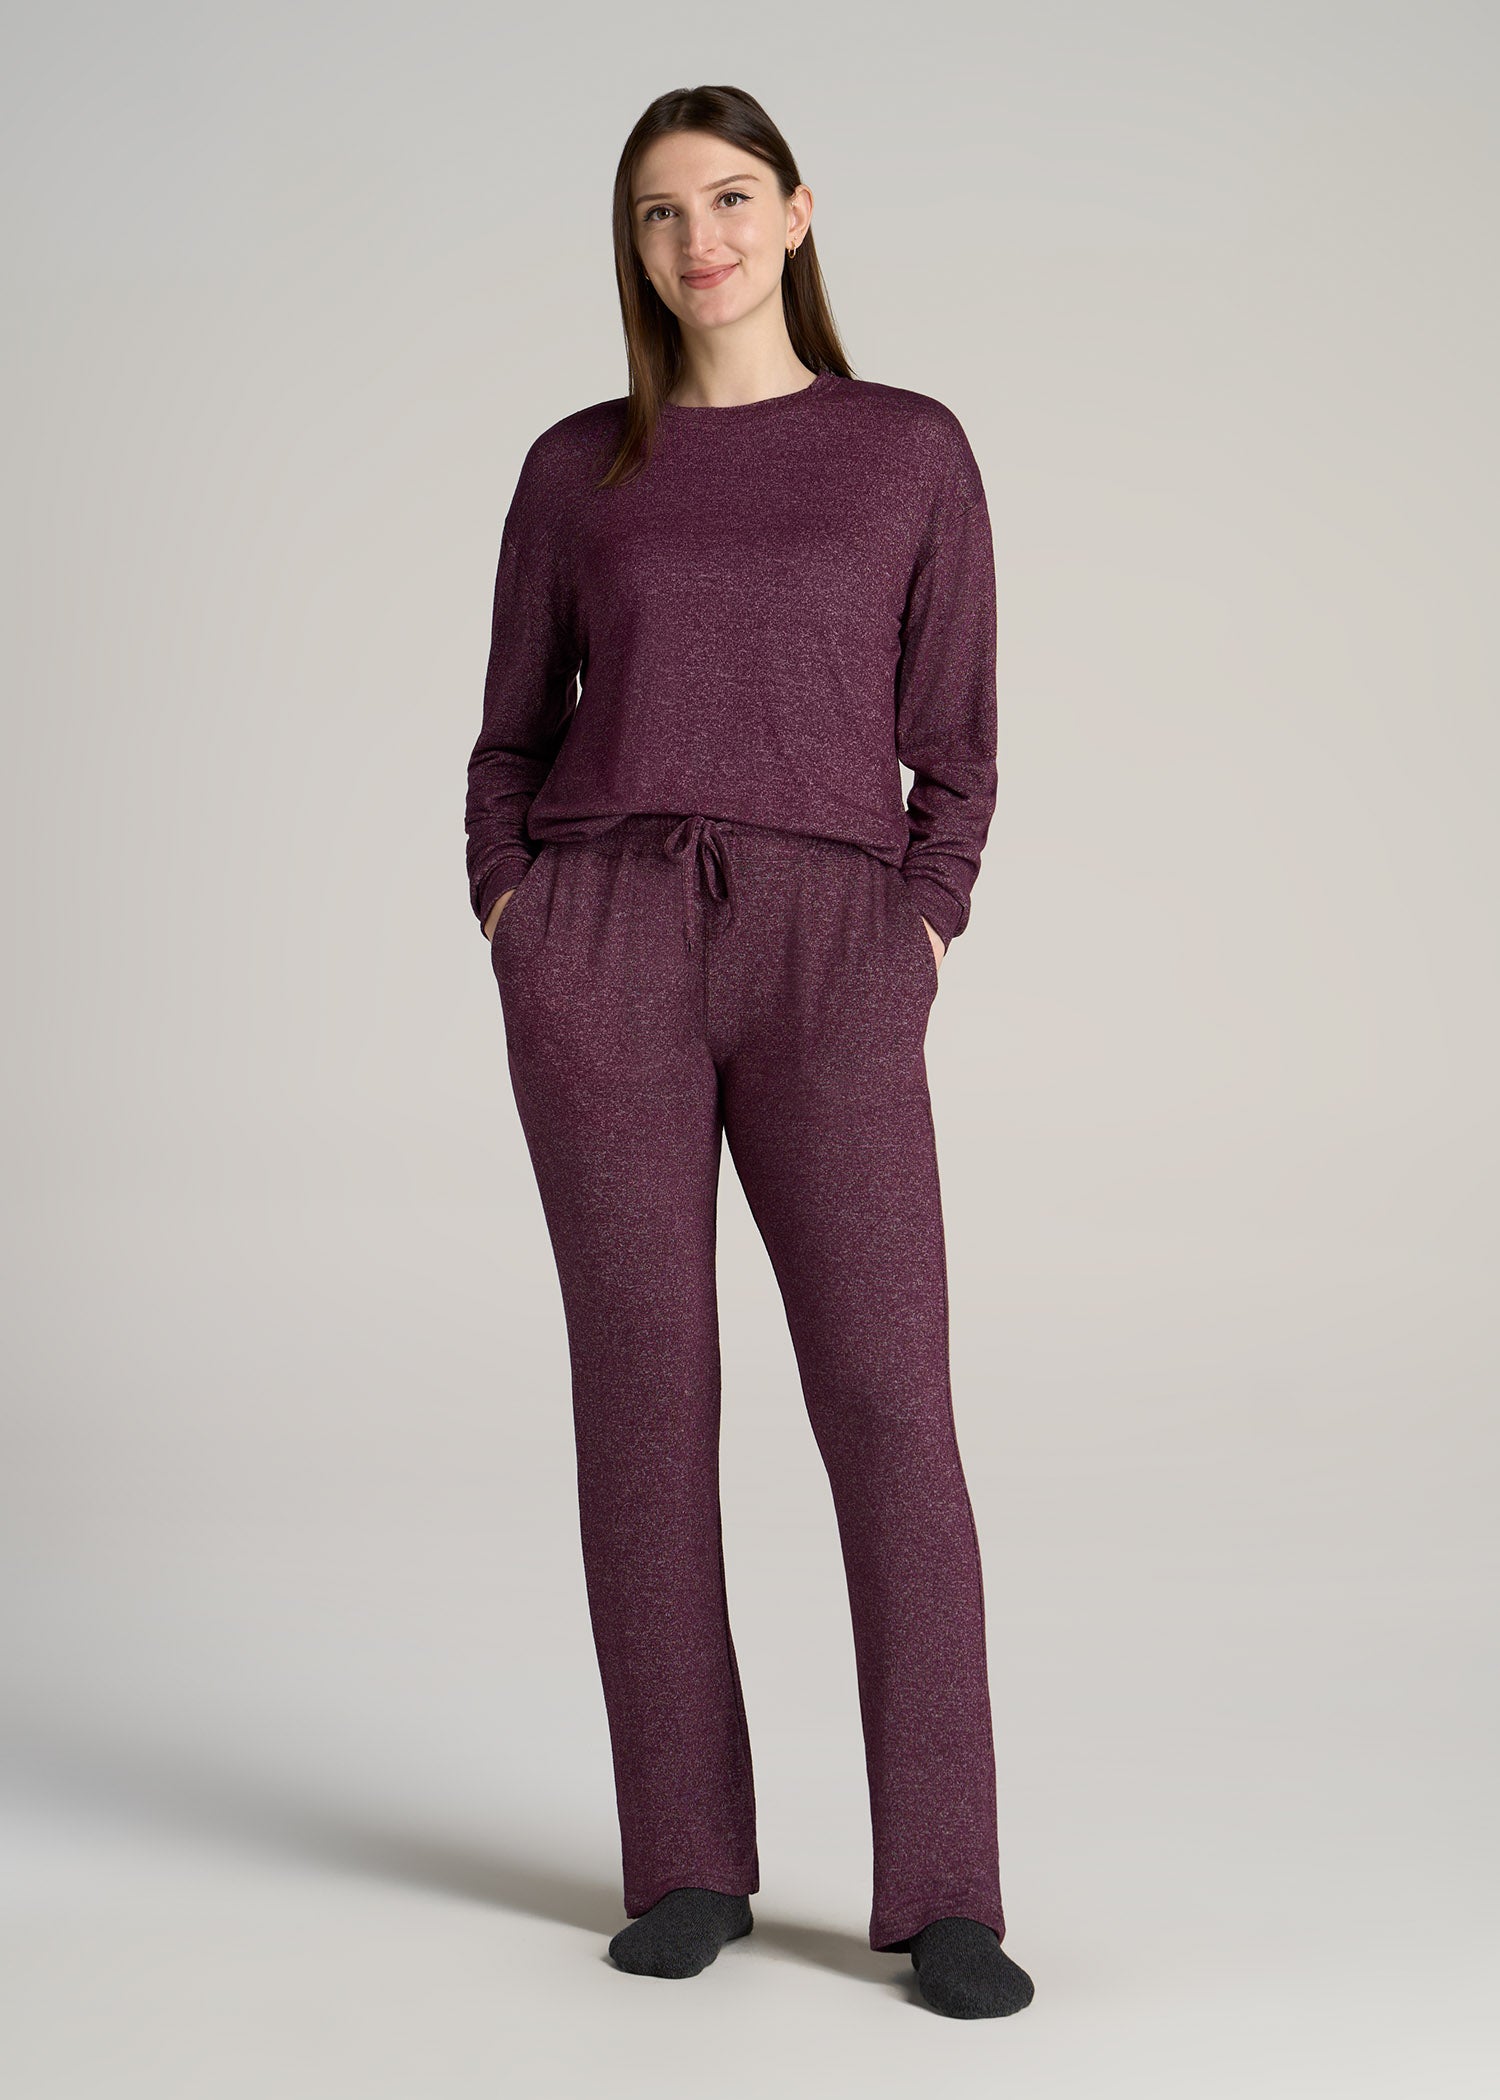 Women's Pajamas & Loungewear The Tall Shop